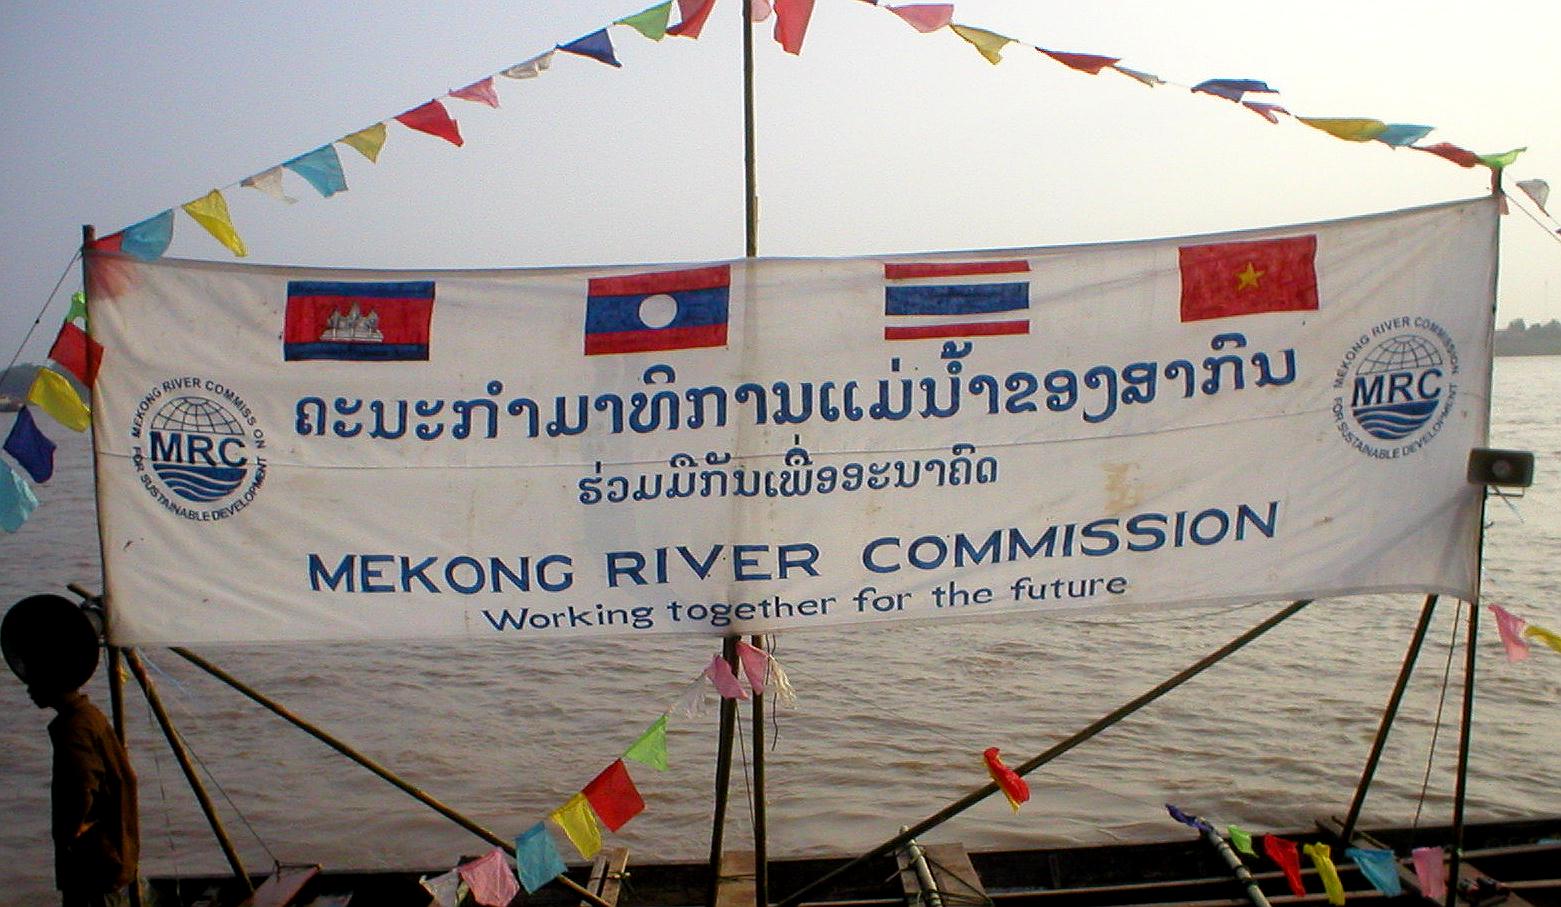 Mrc mekong river commission